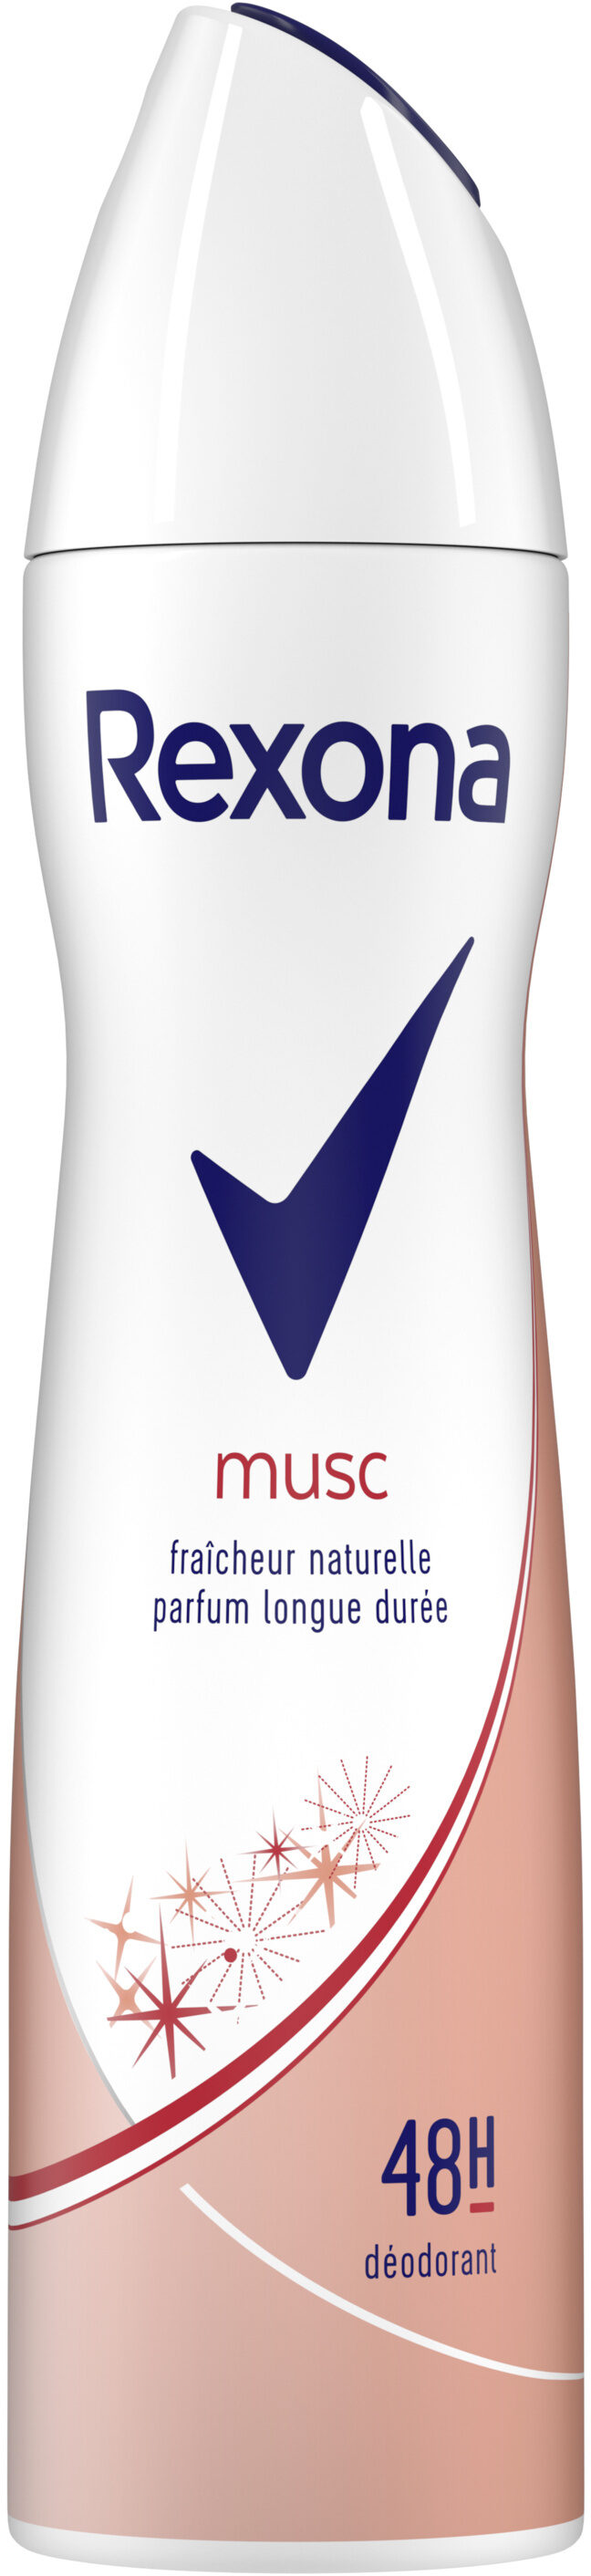 Rfw 200ml spray musc - Produit - fr